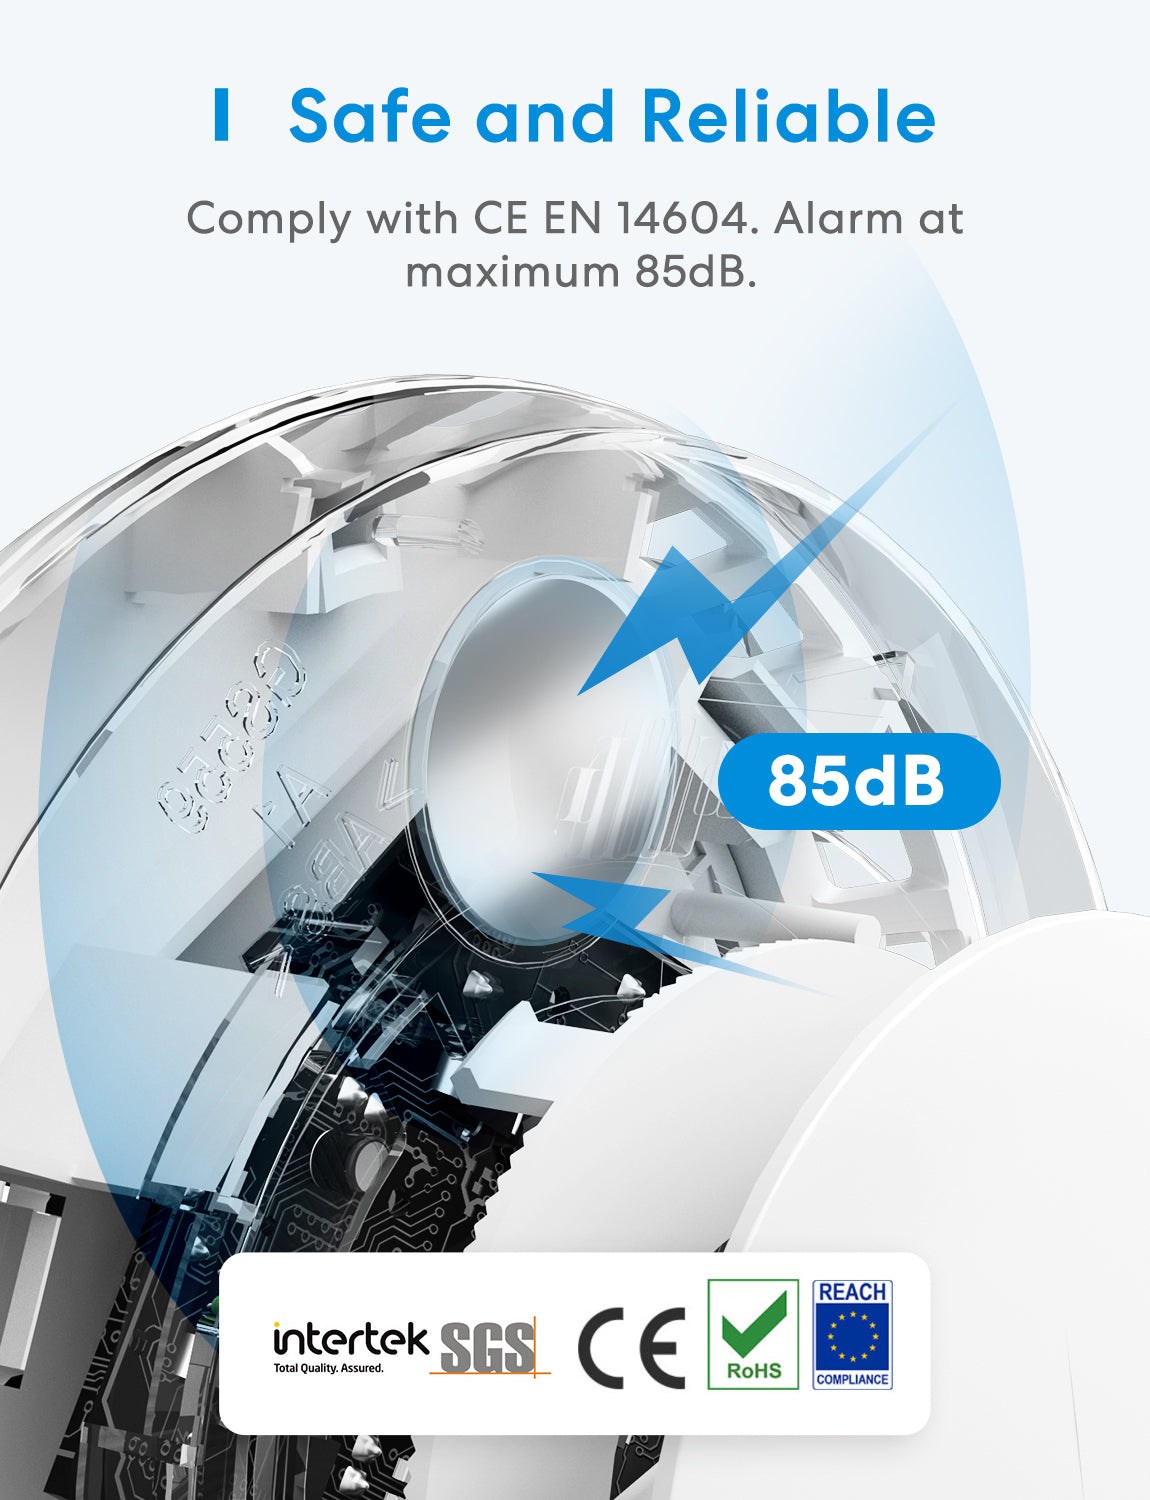 Meross Smart Smoke Alarm Kit, GS559AHHK